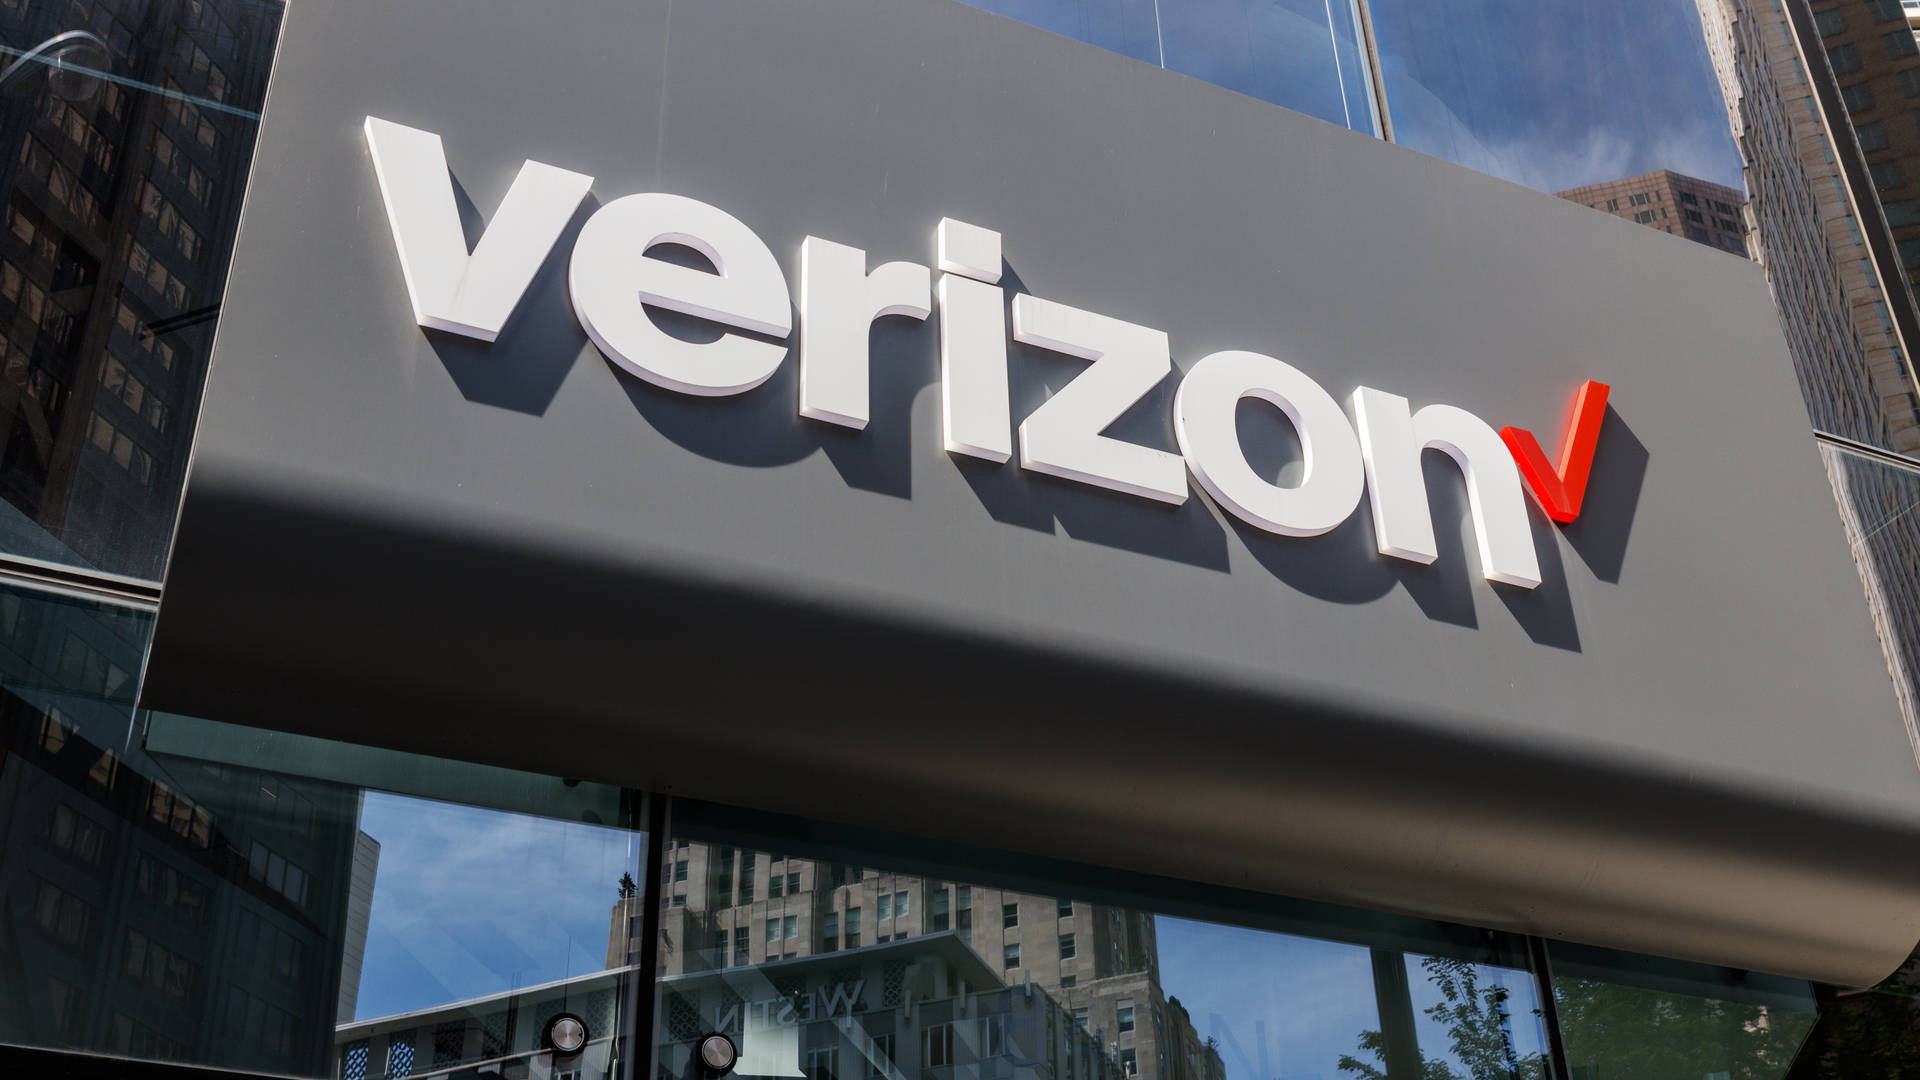 Verizon - Leader In Mobile Network Technology